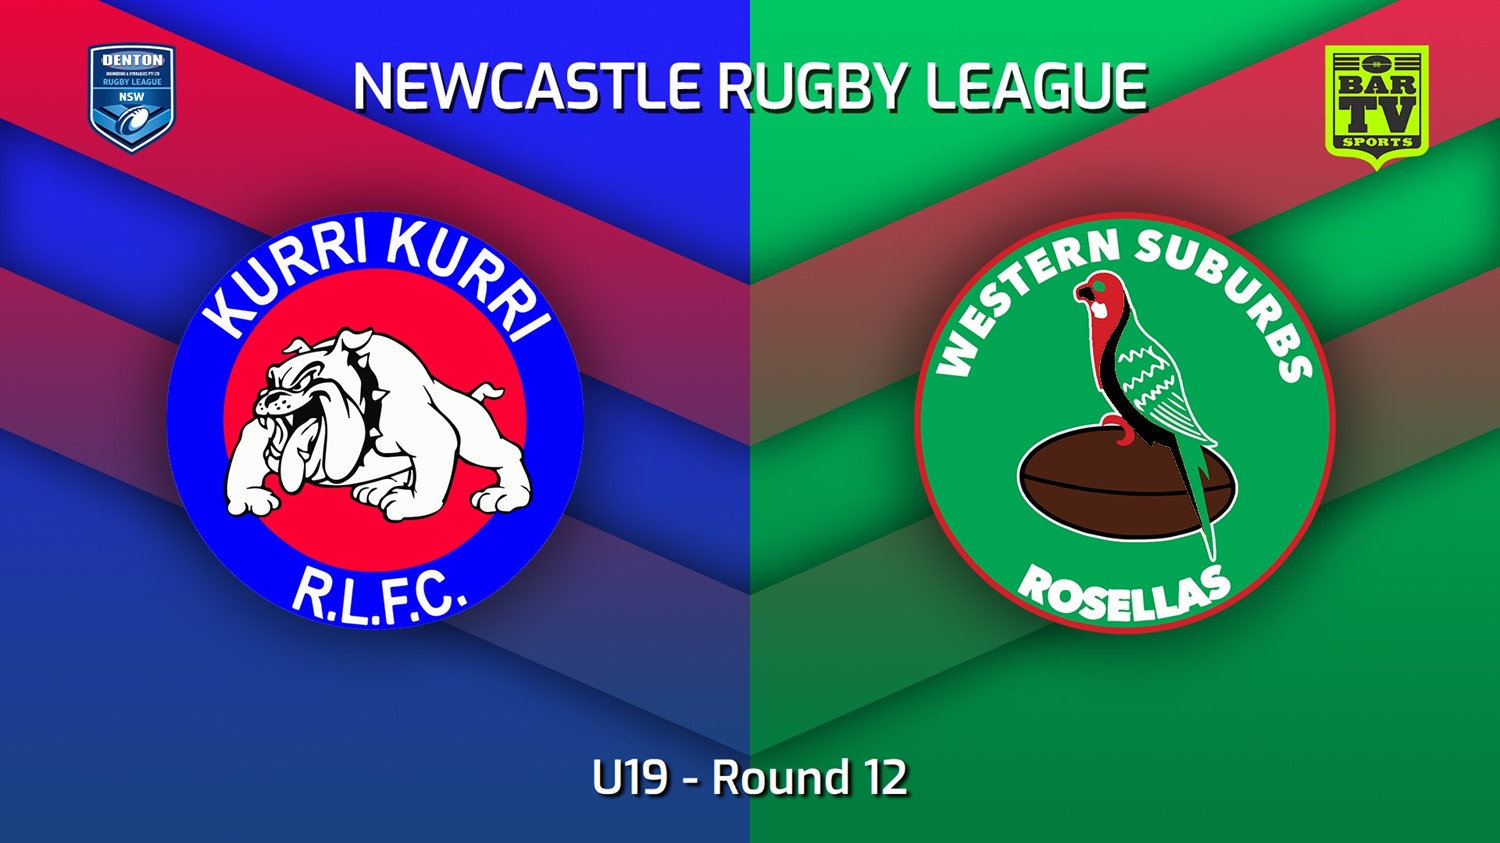 220618-Newcastle Round 12 - U19 - Kurri Kurri Bulldogs v Western Suburbs Rosellas Slate Image